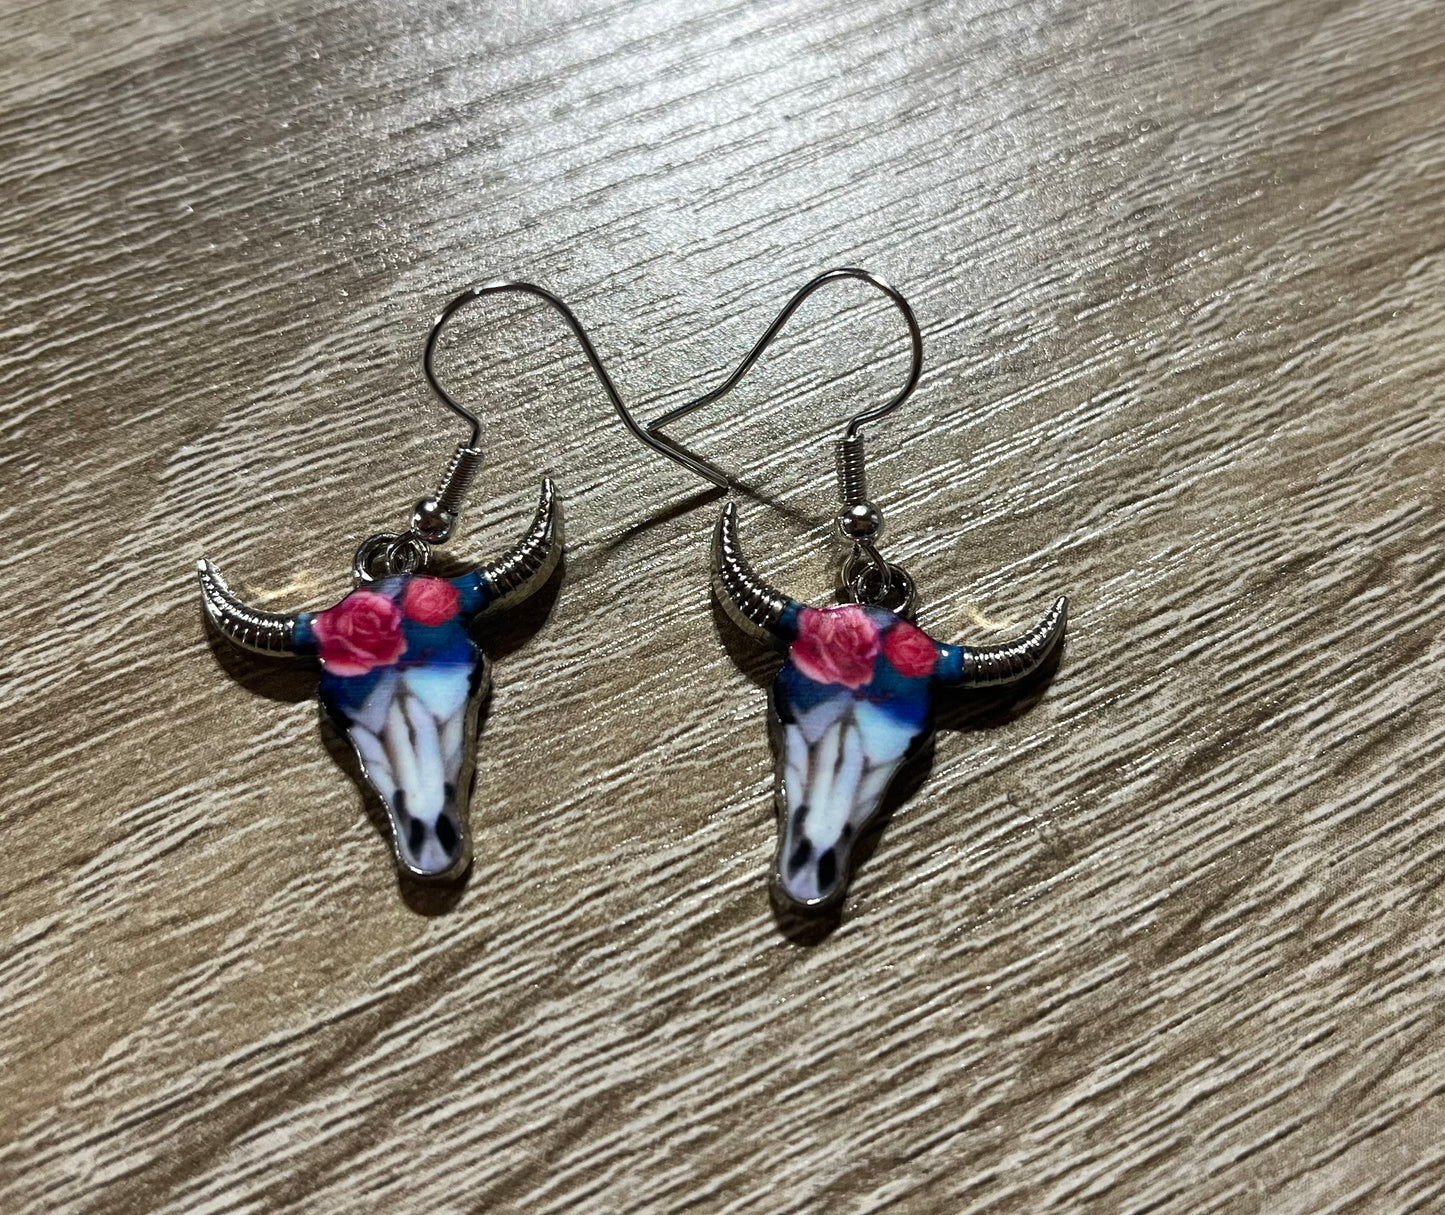 Longhorn earrings